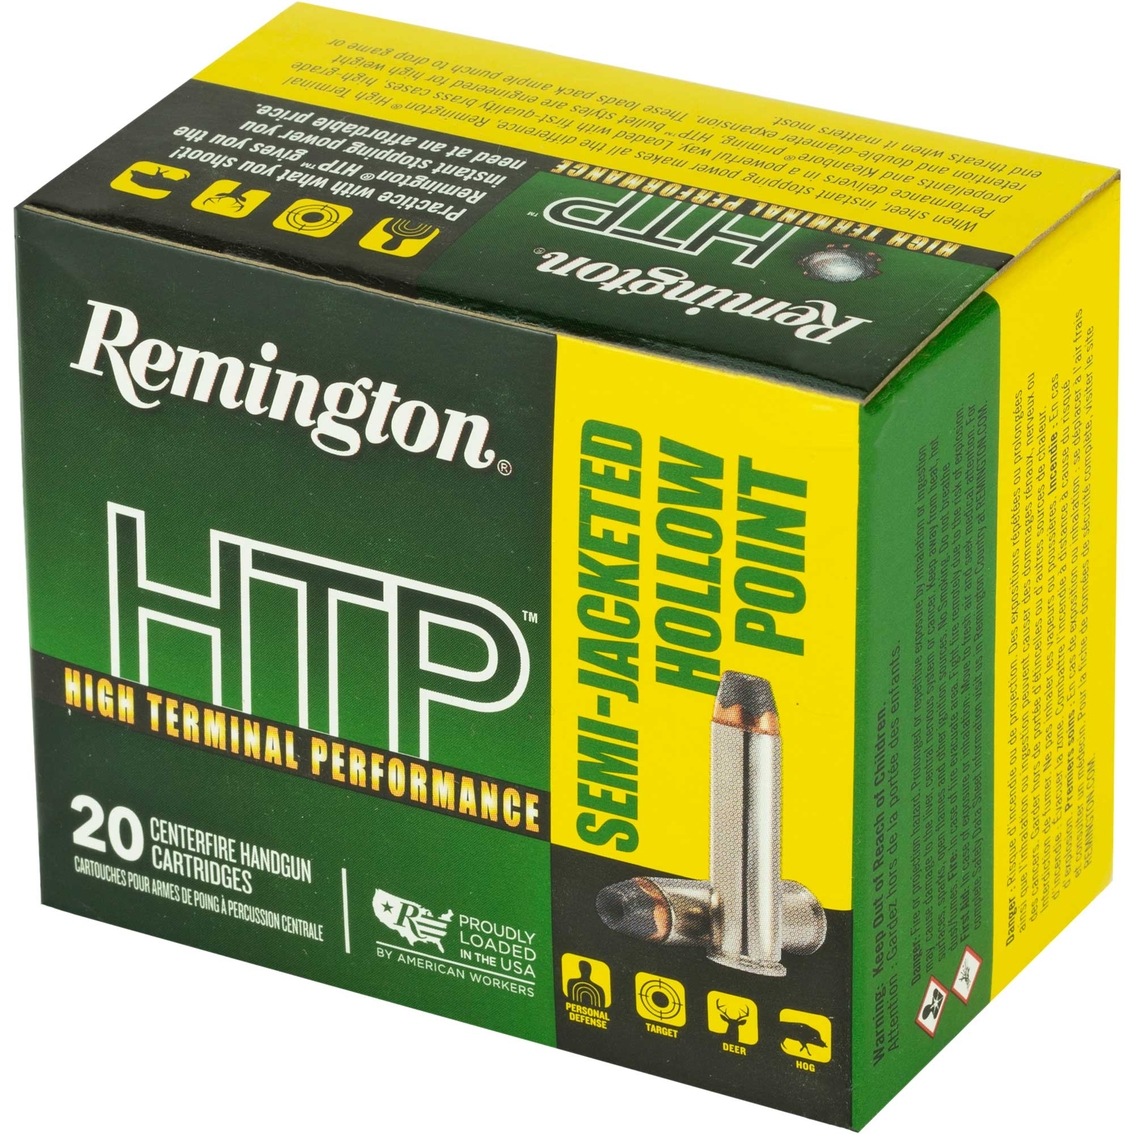 Remington High Terminal Performance .357 Magnum 158 Gr. Semi-JHP 20 Rounds - Image 2 of 4